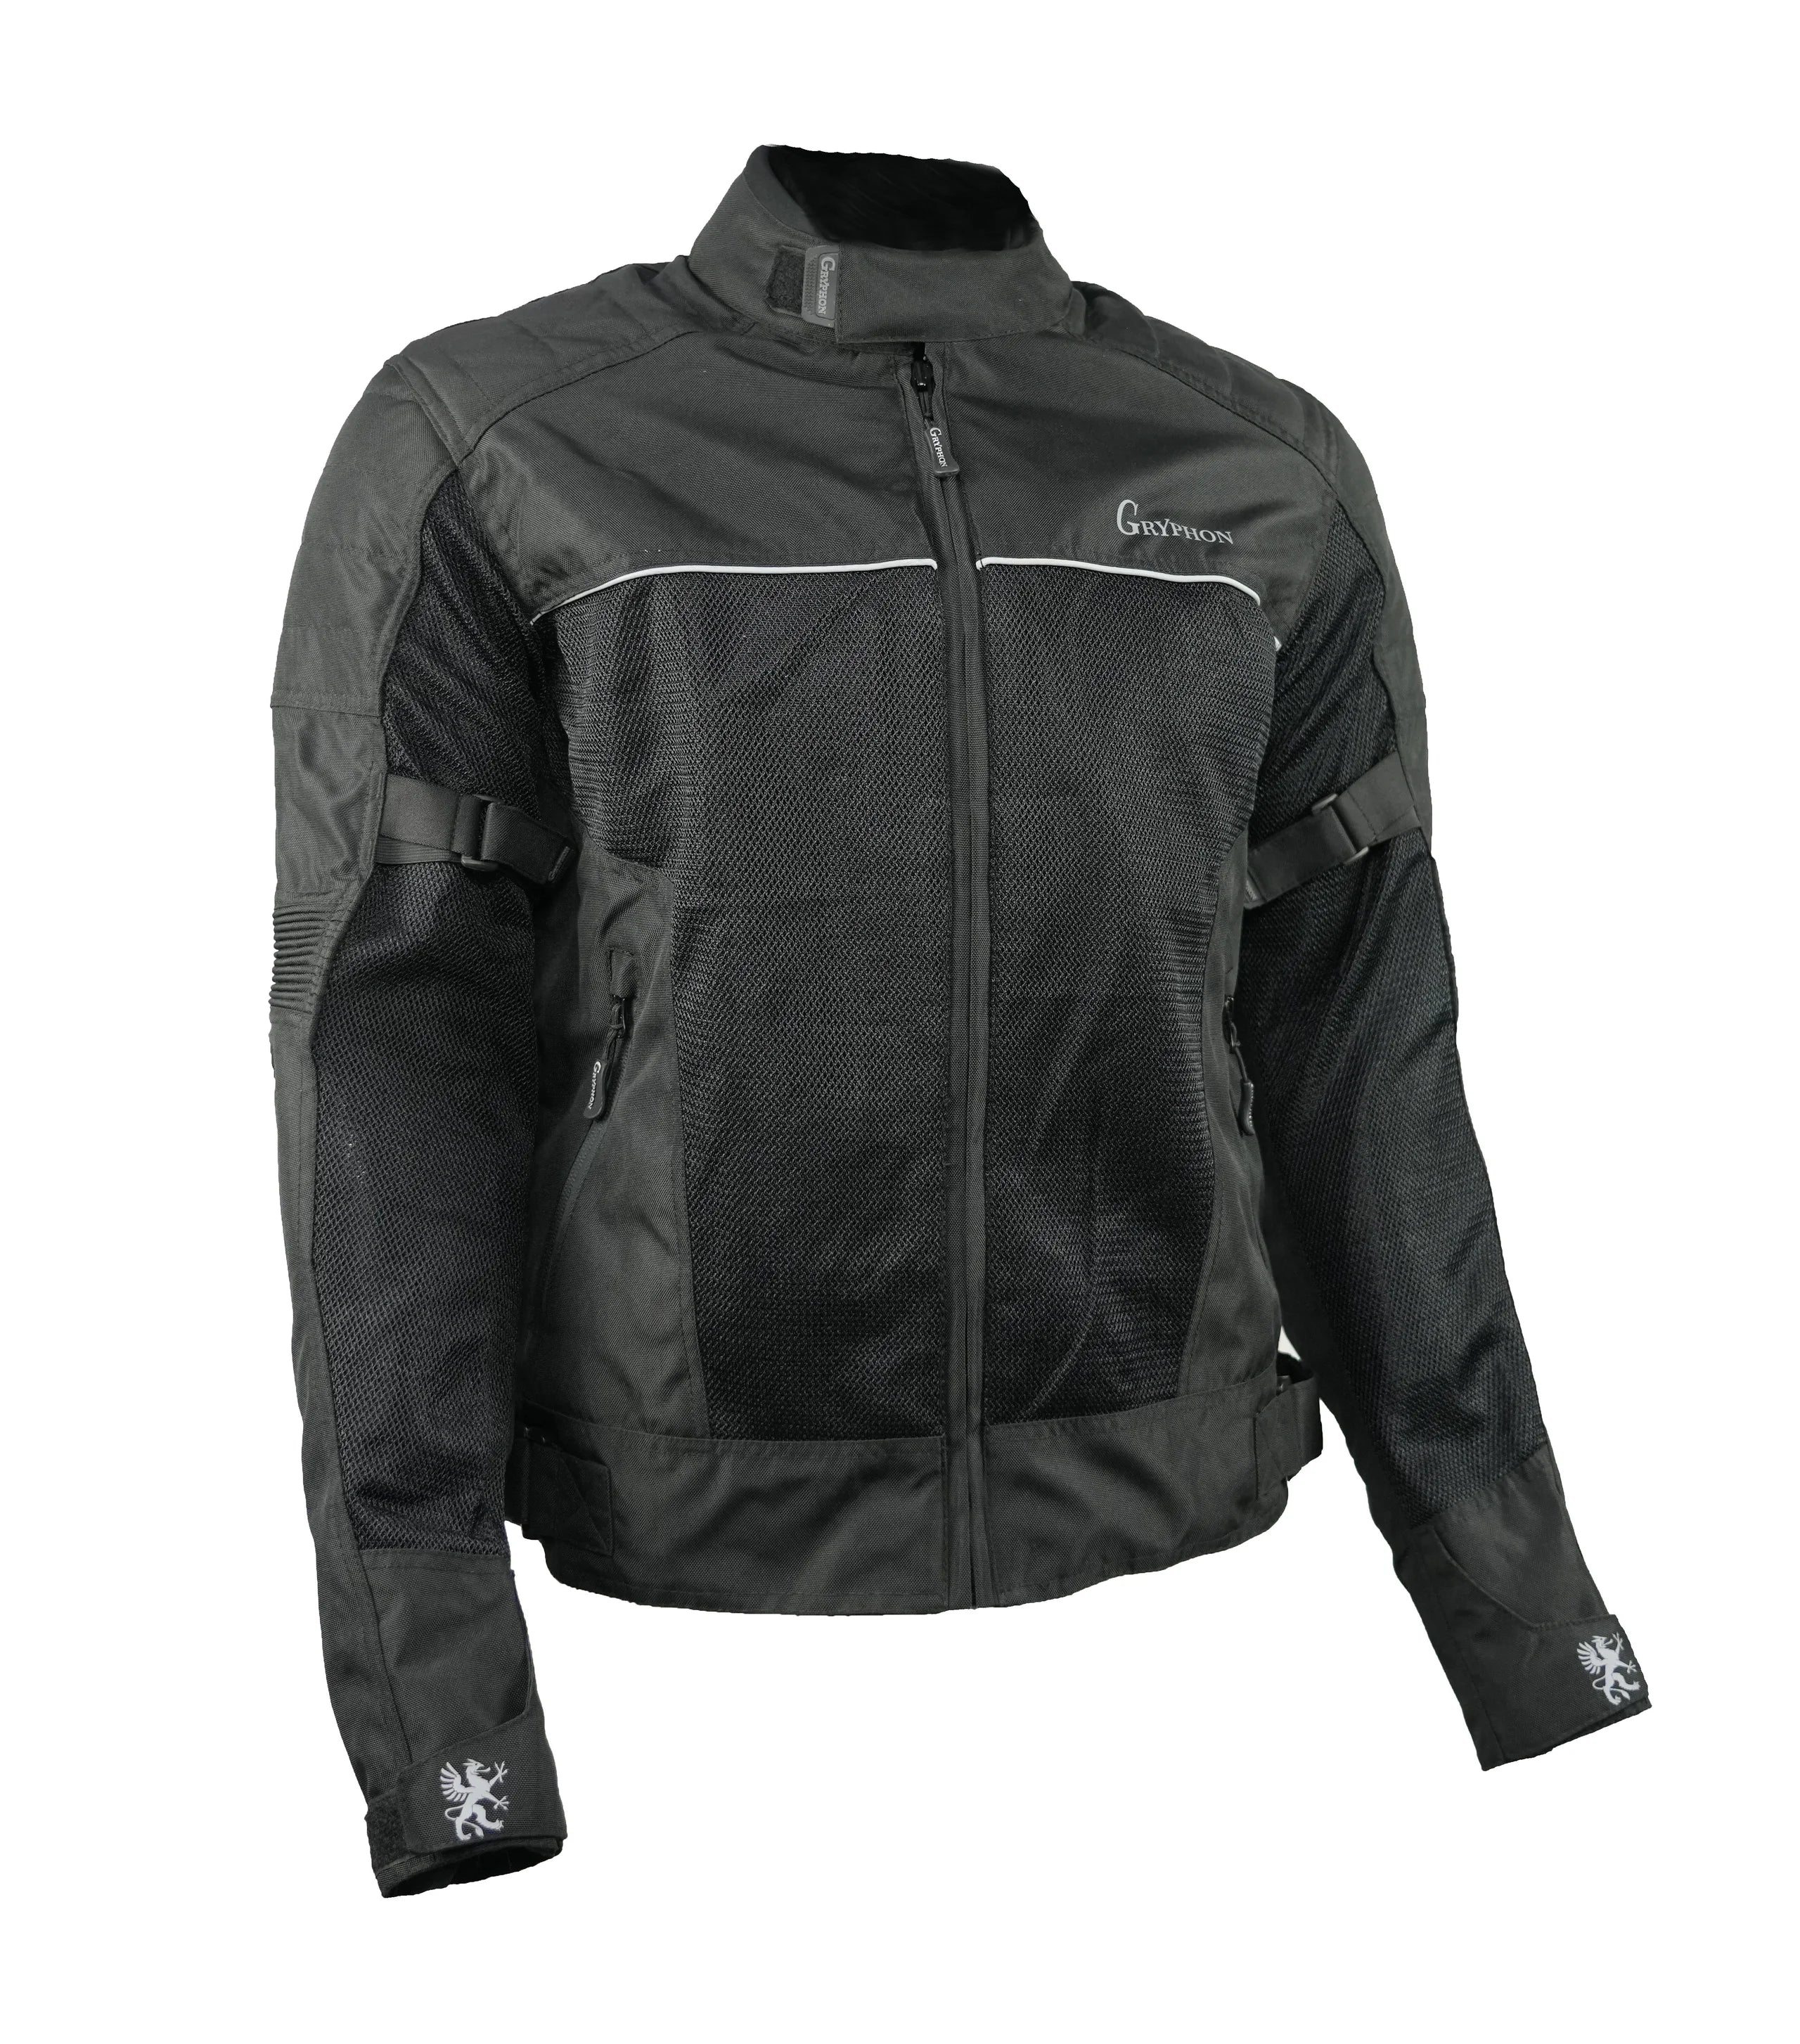 GRYPHON Men's Breeze Mesh Textile Jacket - BLACK